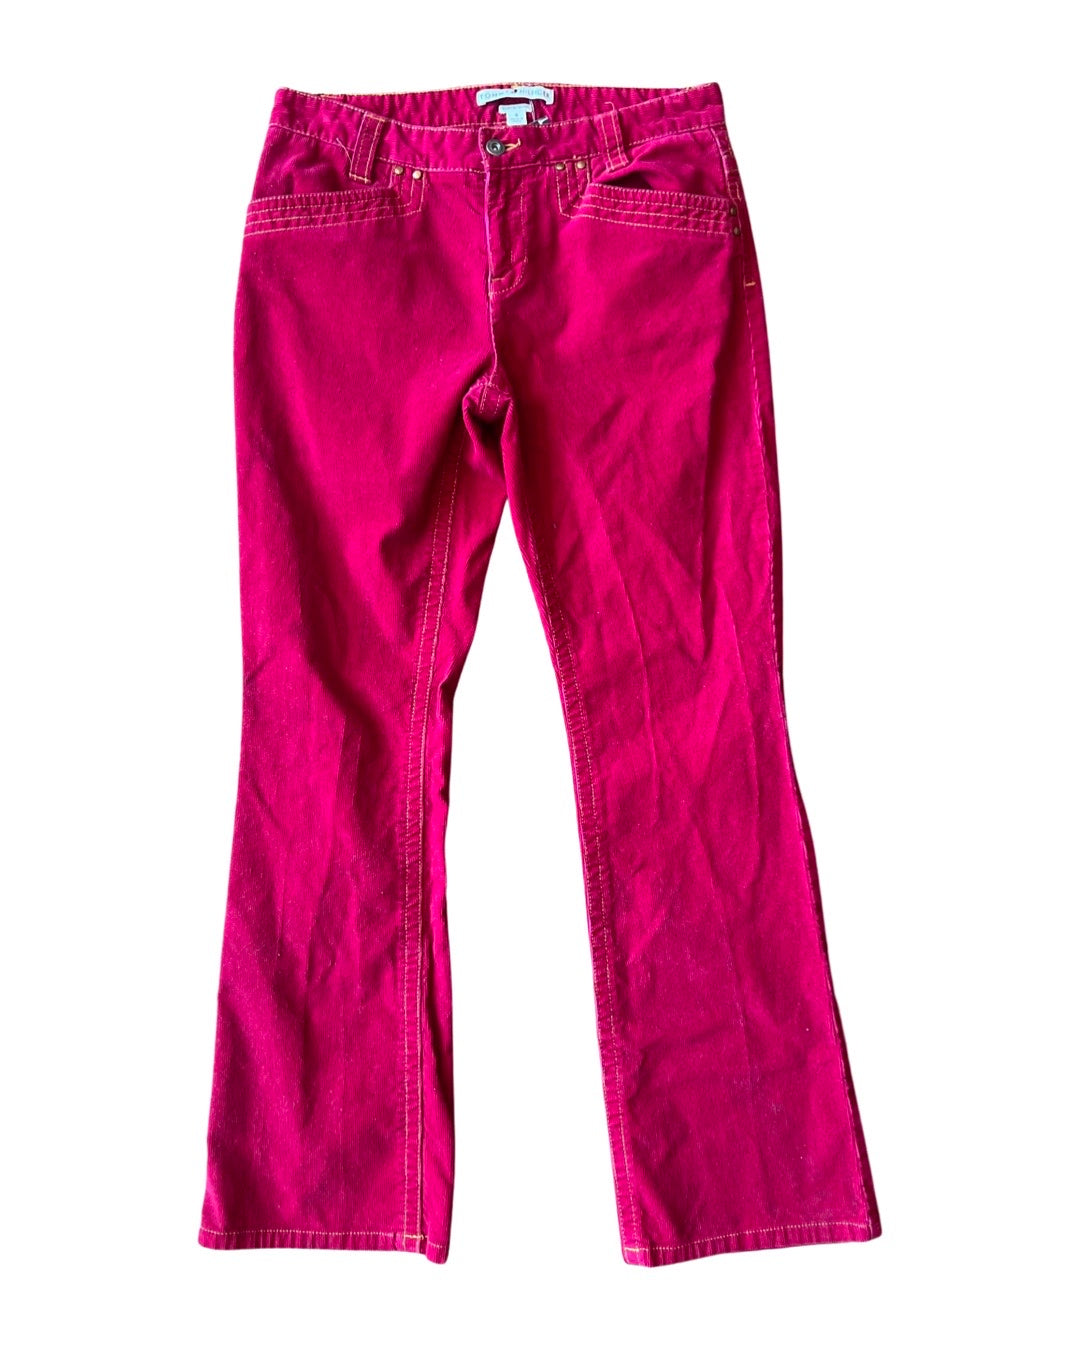 HILFIGER Vintage Vibrant Red Corduroy Hipster Boot Pants – Rumors Select